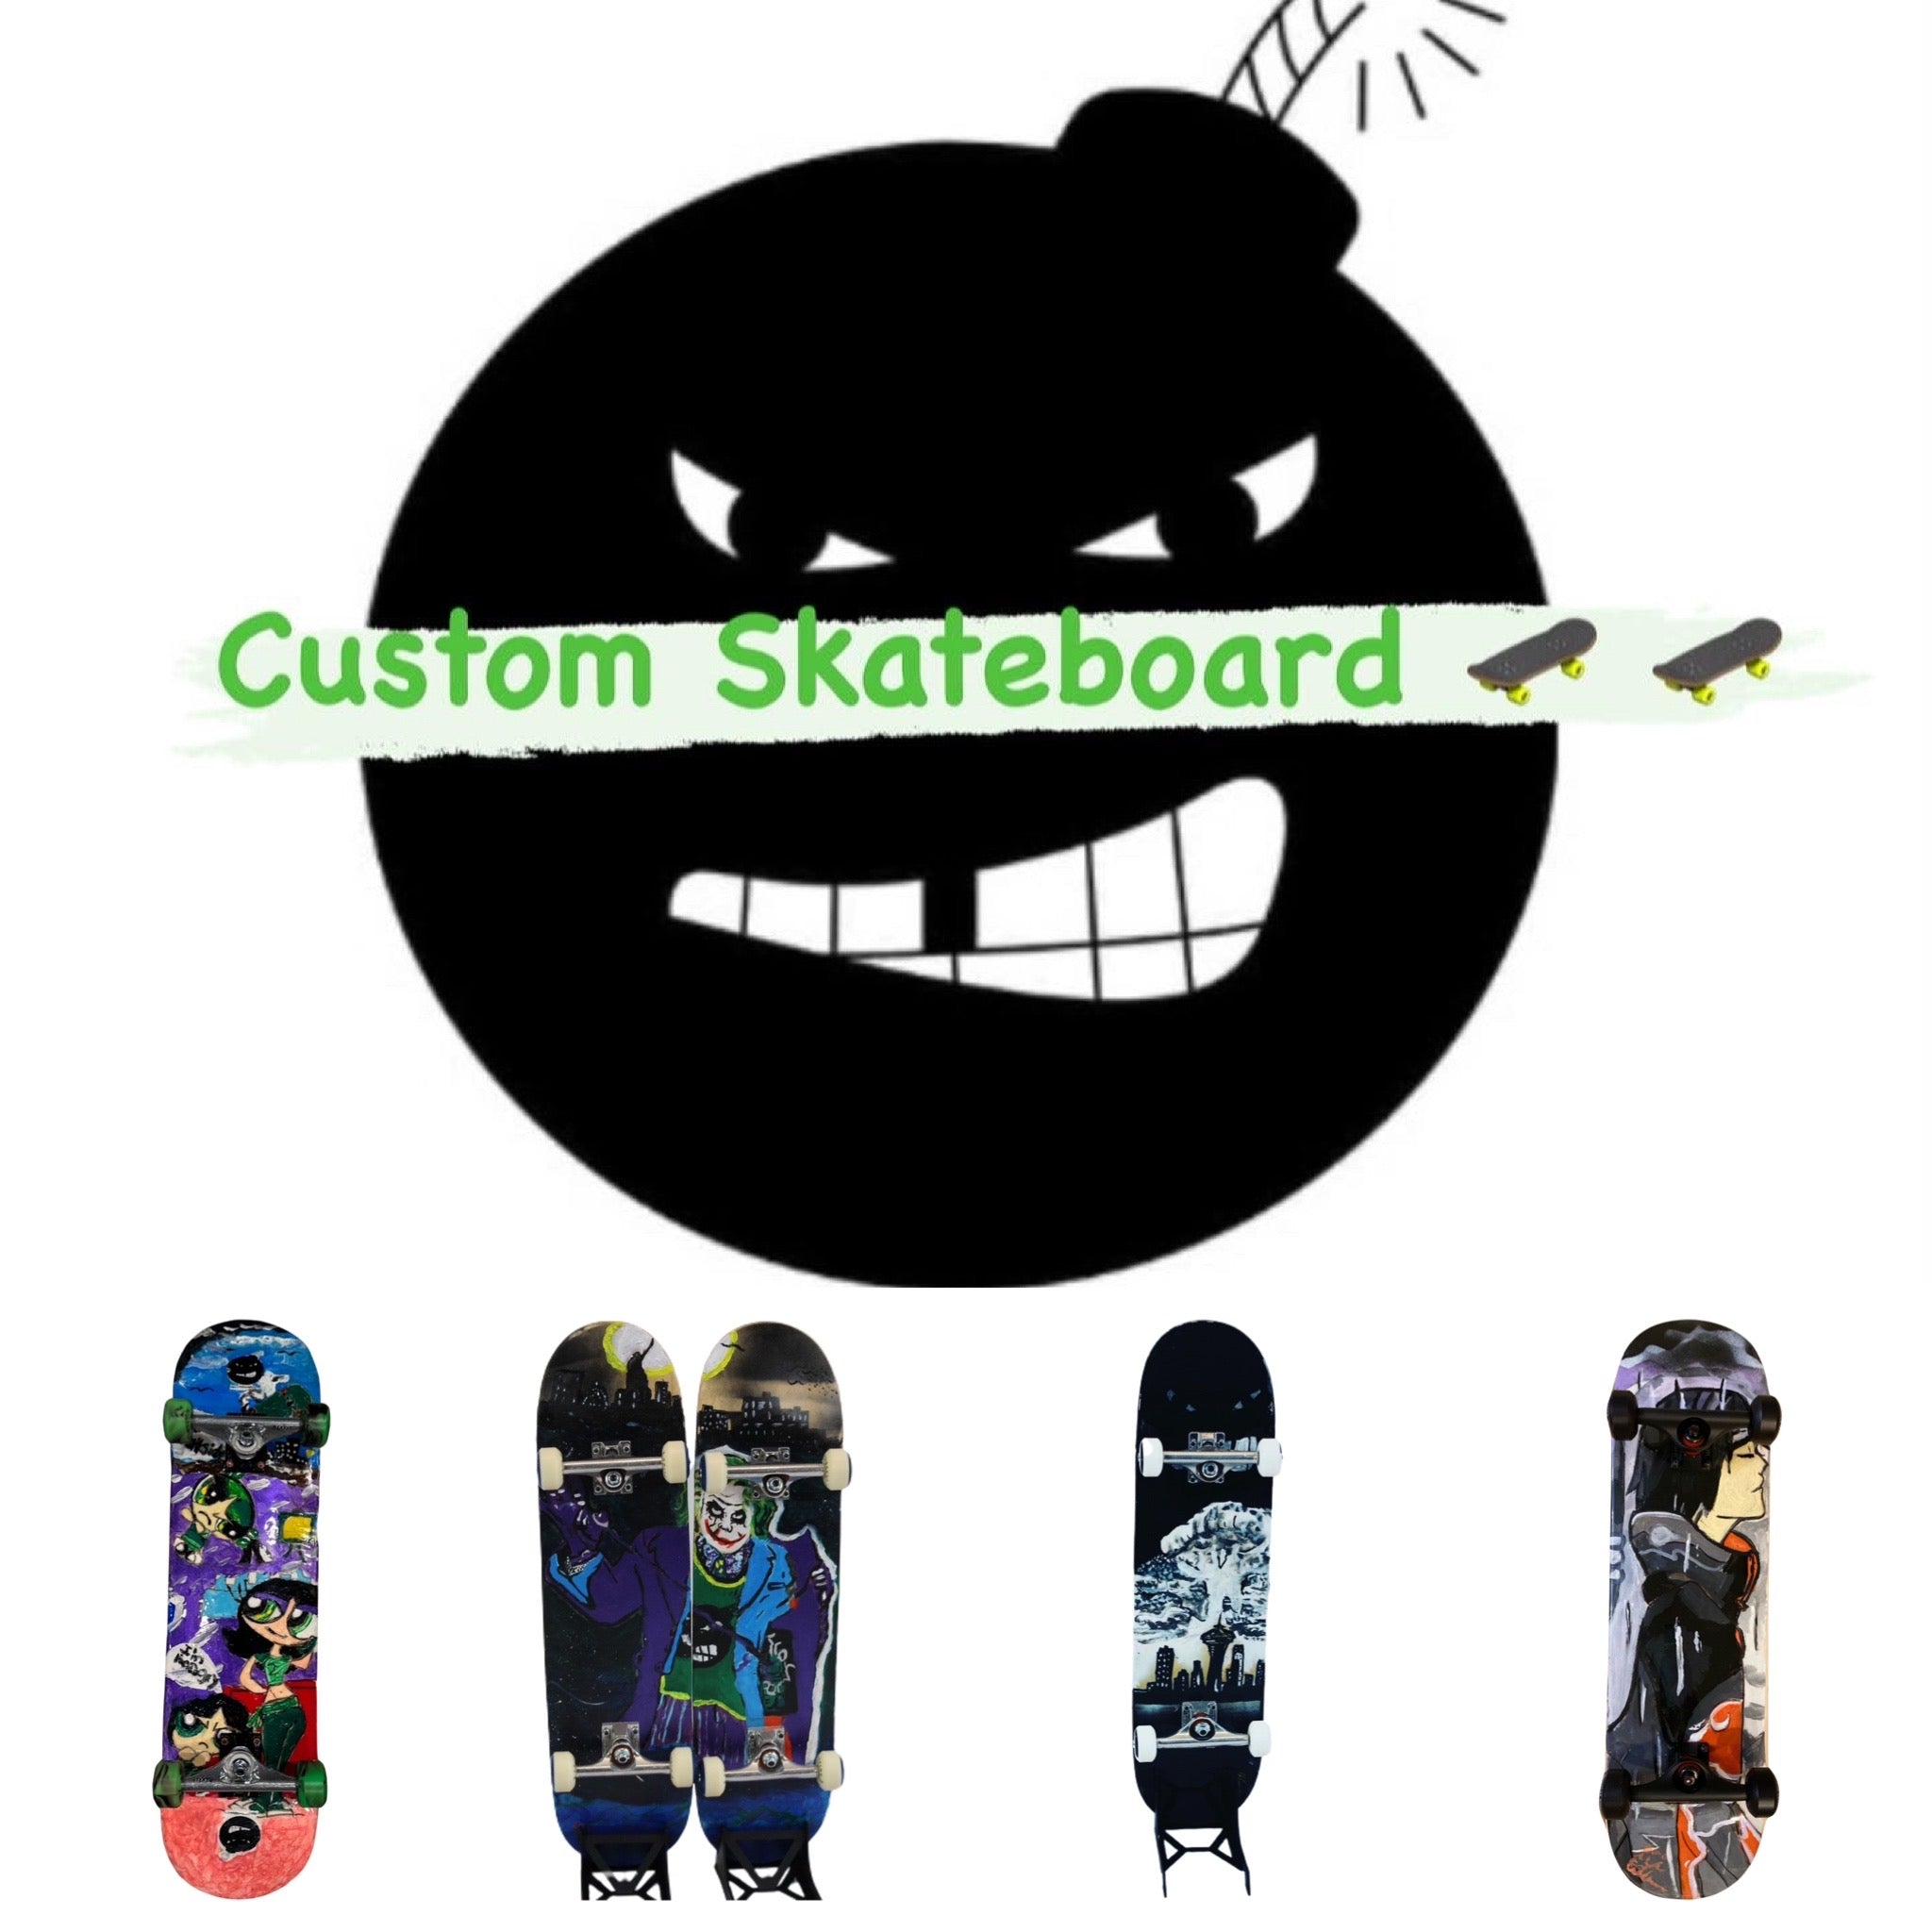 custom skateboard, skaetboard with paint, acrylic paint, paint on skateboard